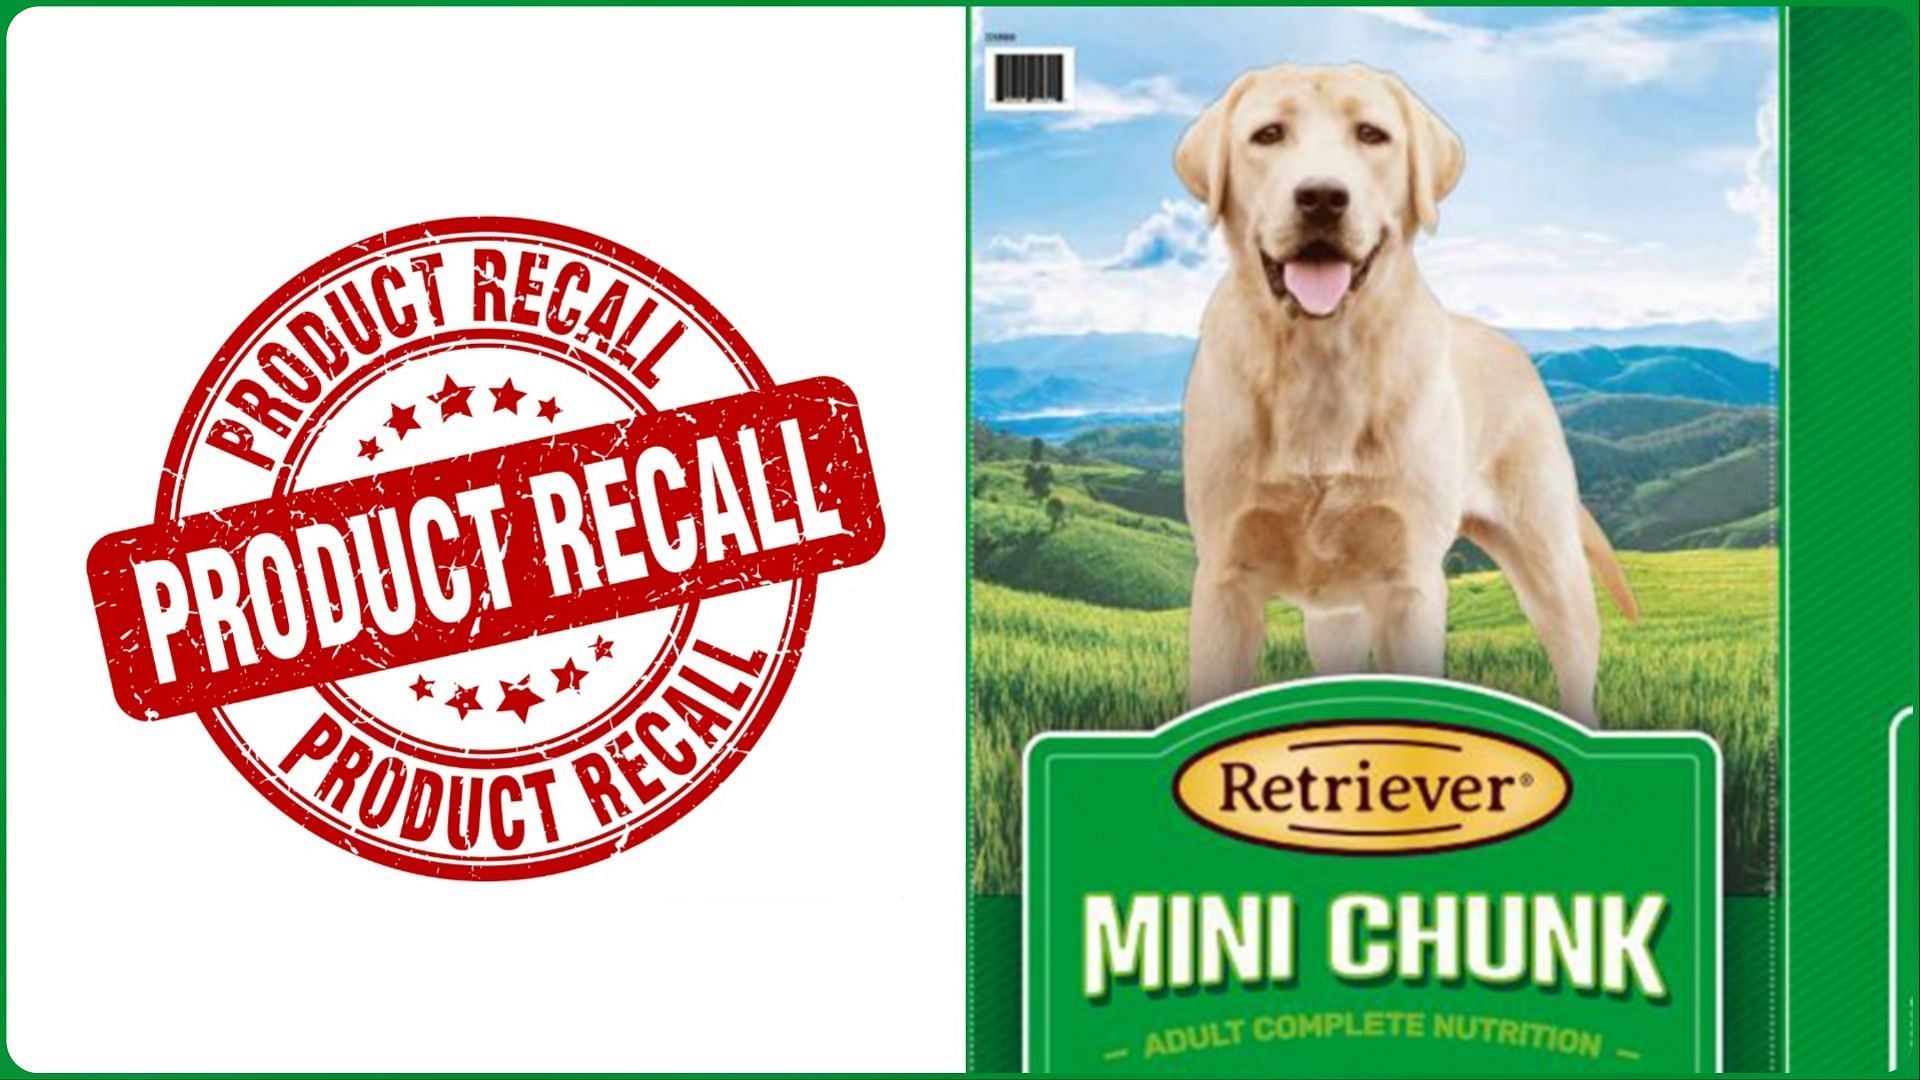 Texas Farm Production Company recalls Retriever Dry Dog Food over Salmonella contamination concerns (Image via FDA)